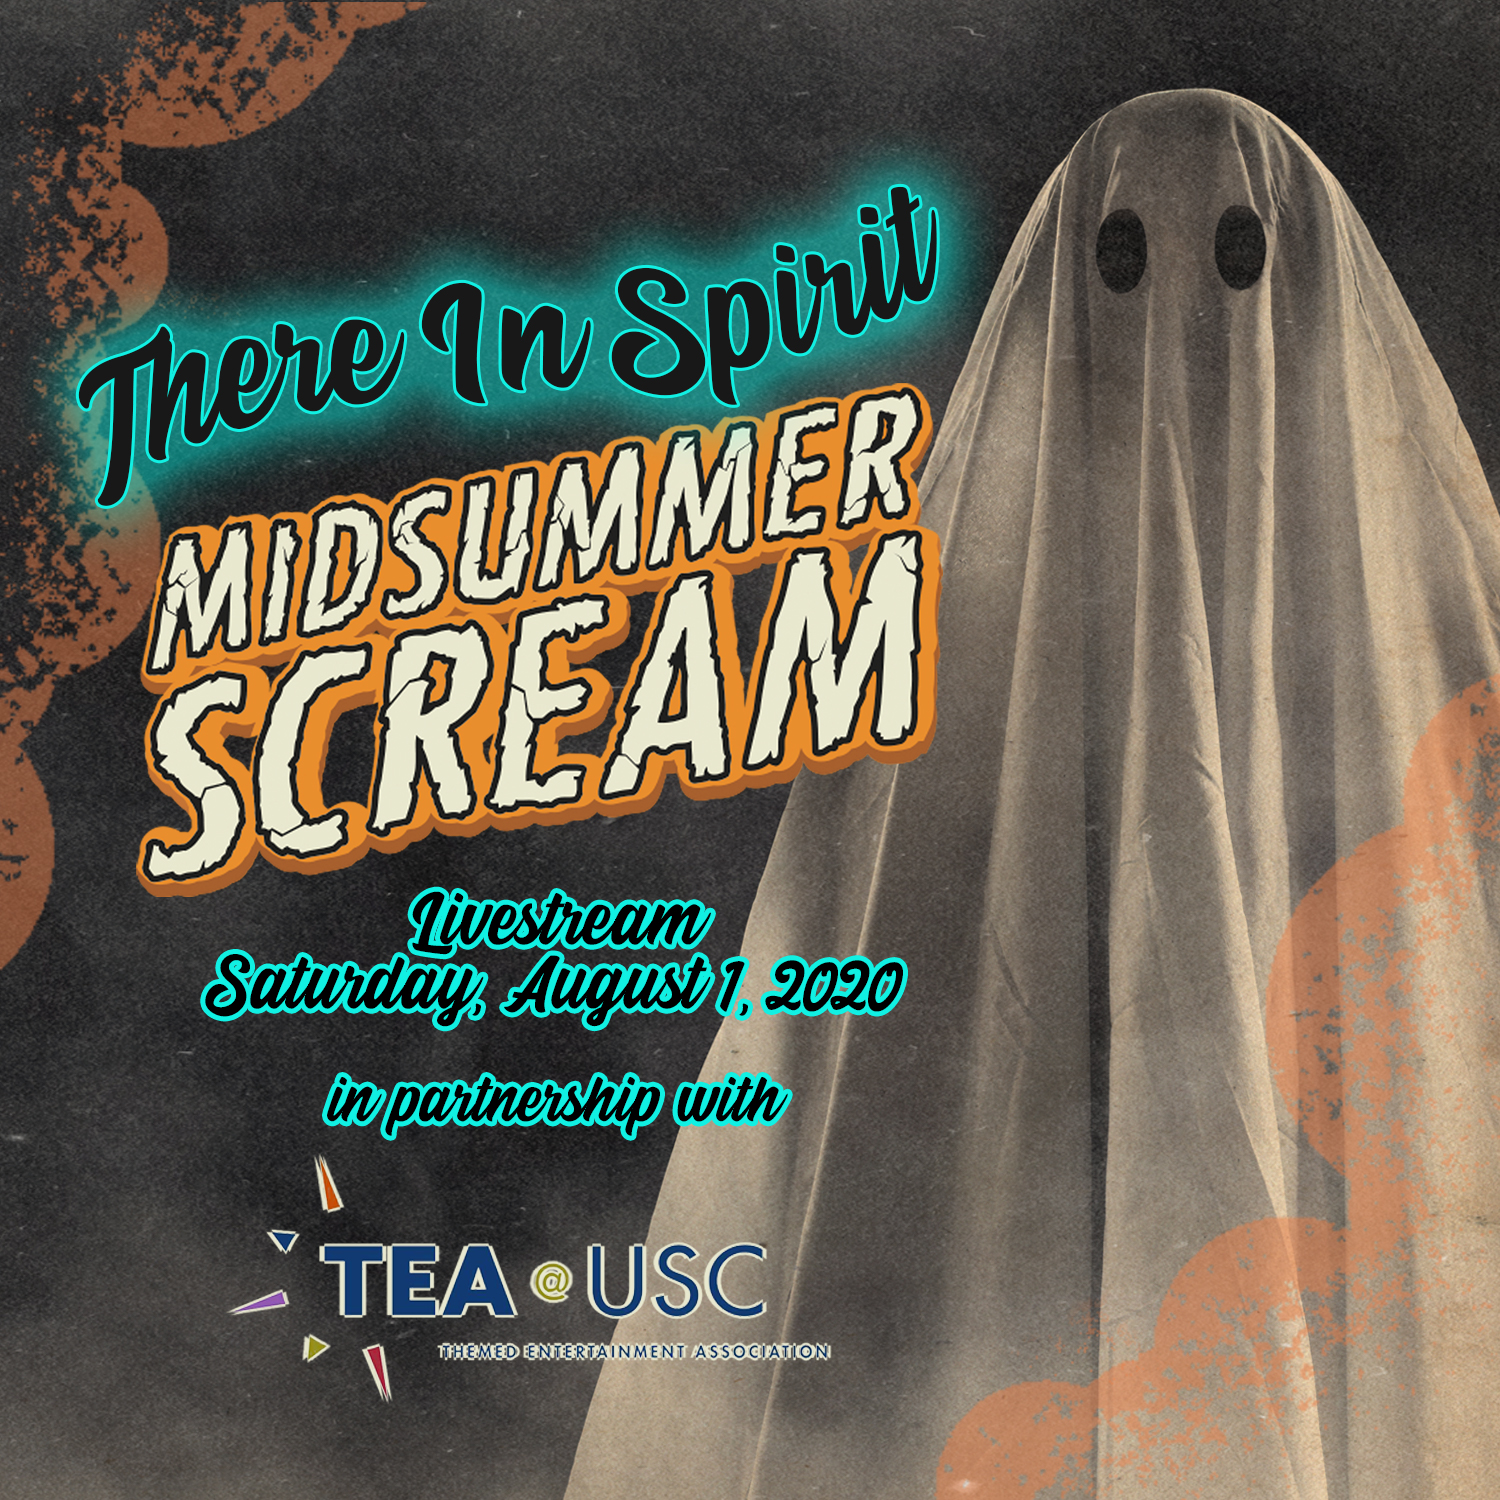 AUG 1 - Midsummer Scream Livestream - SpookyInc